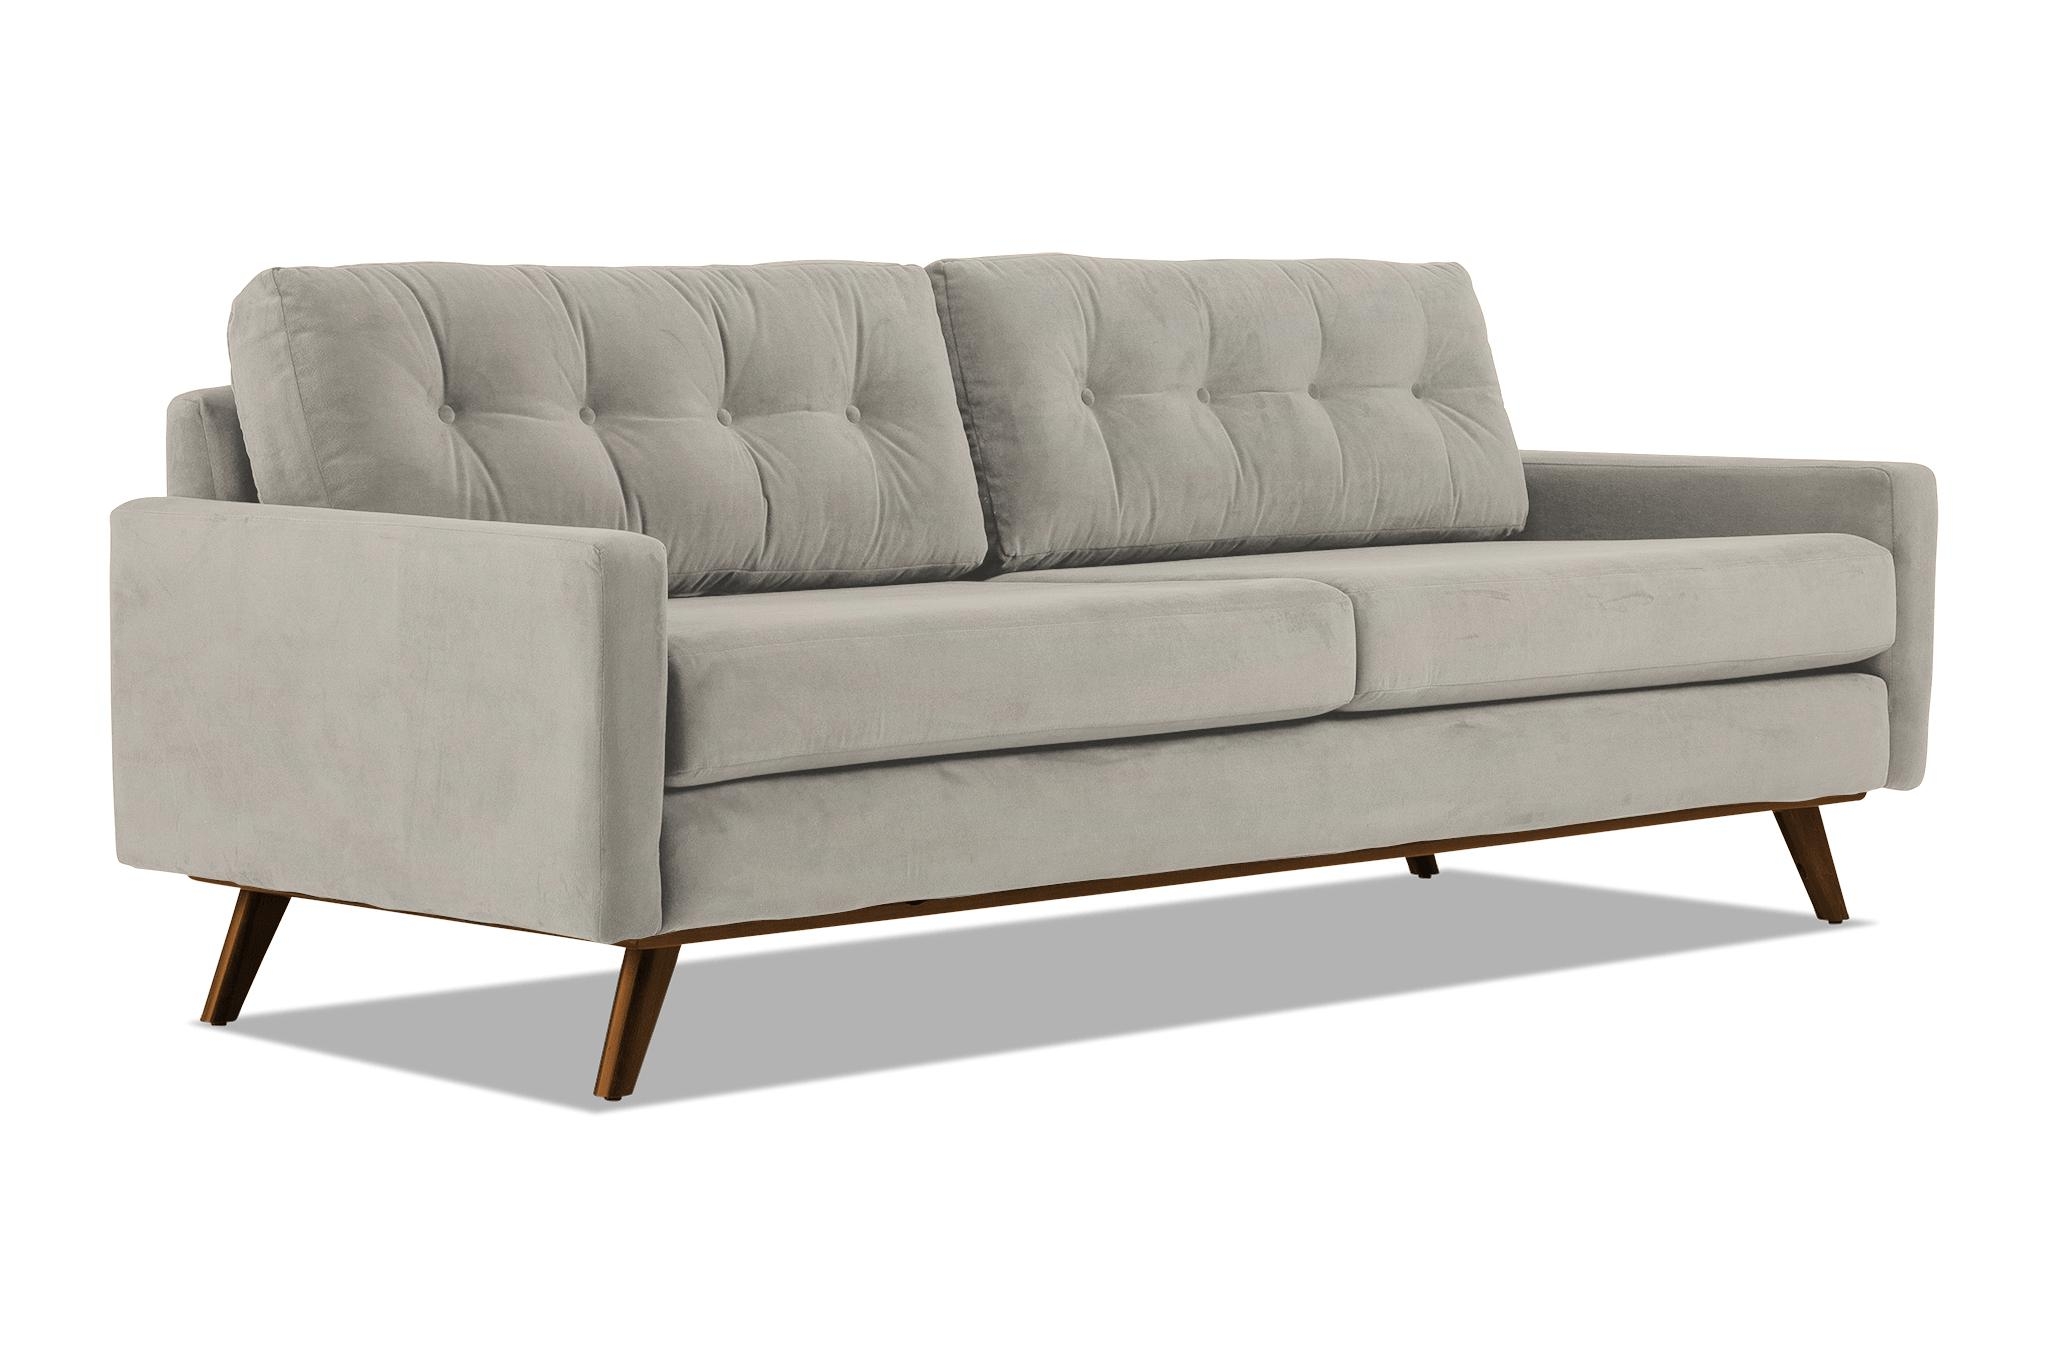 White Hopson Mid Century Modern Sofa - Bloke Cotton - Mocha - Image 1